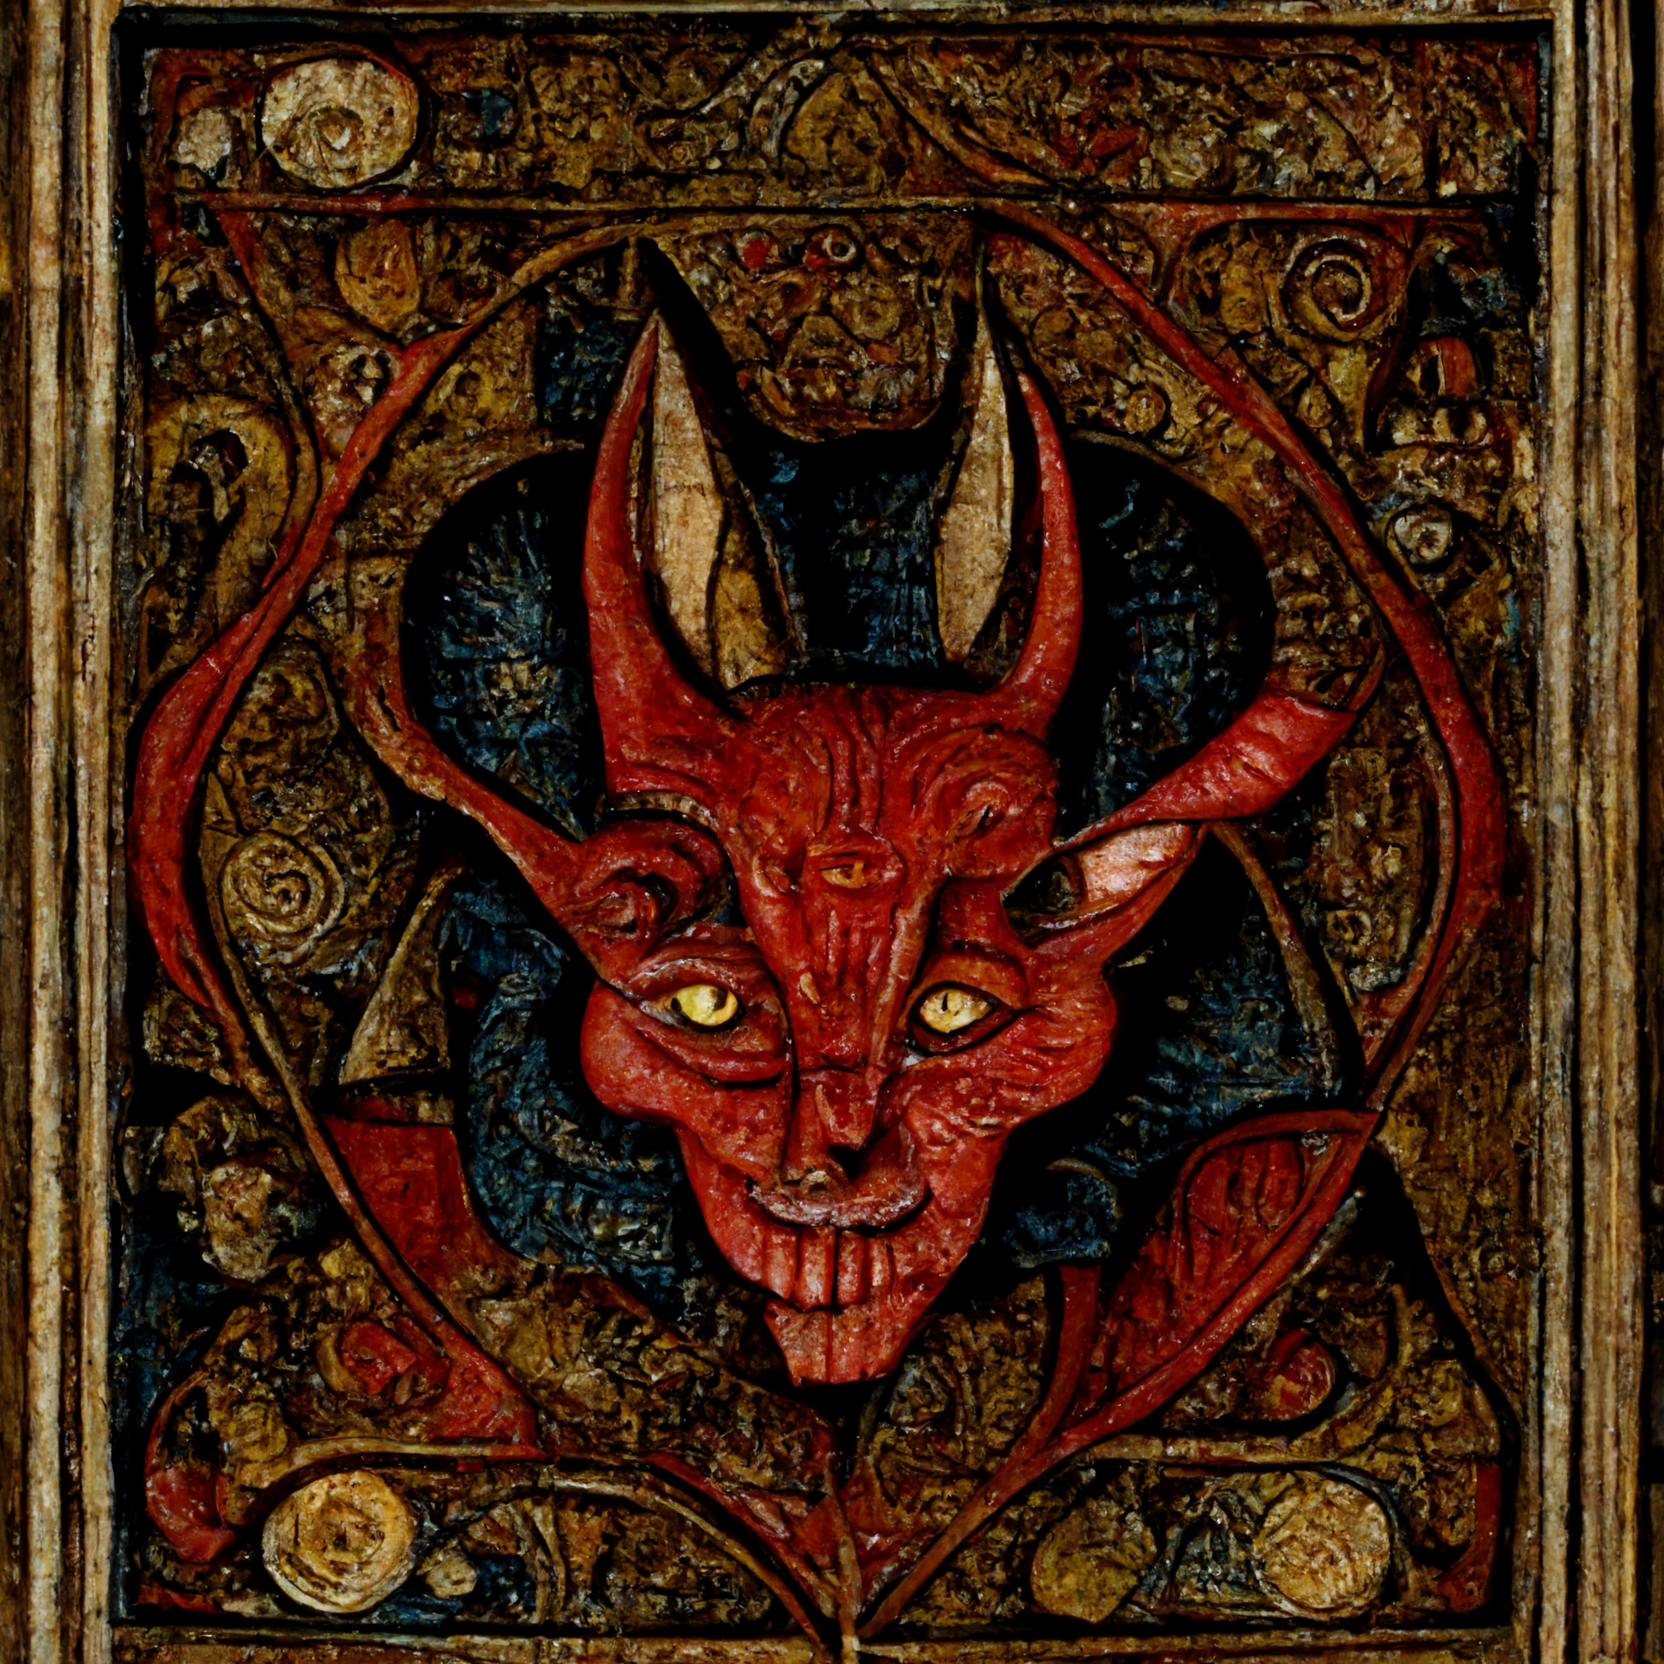 Ulysses_Black_devil_in_the_style_of_a_medieval_manuscript_f71b1b92-3797-4d44-9245-69d8b5141fed.png